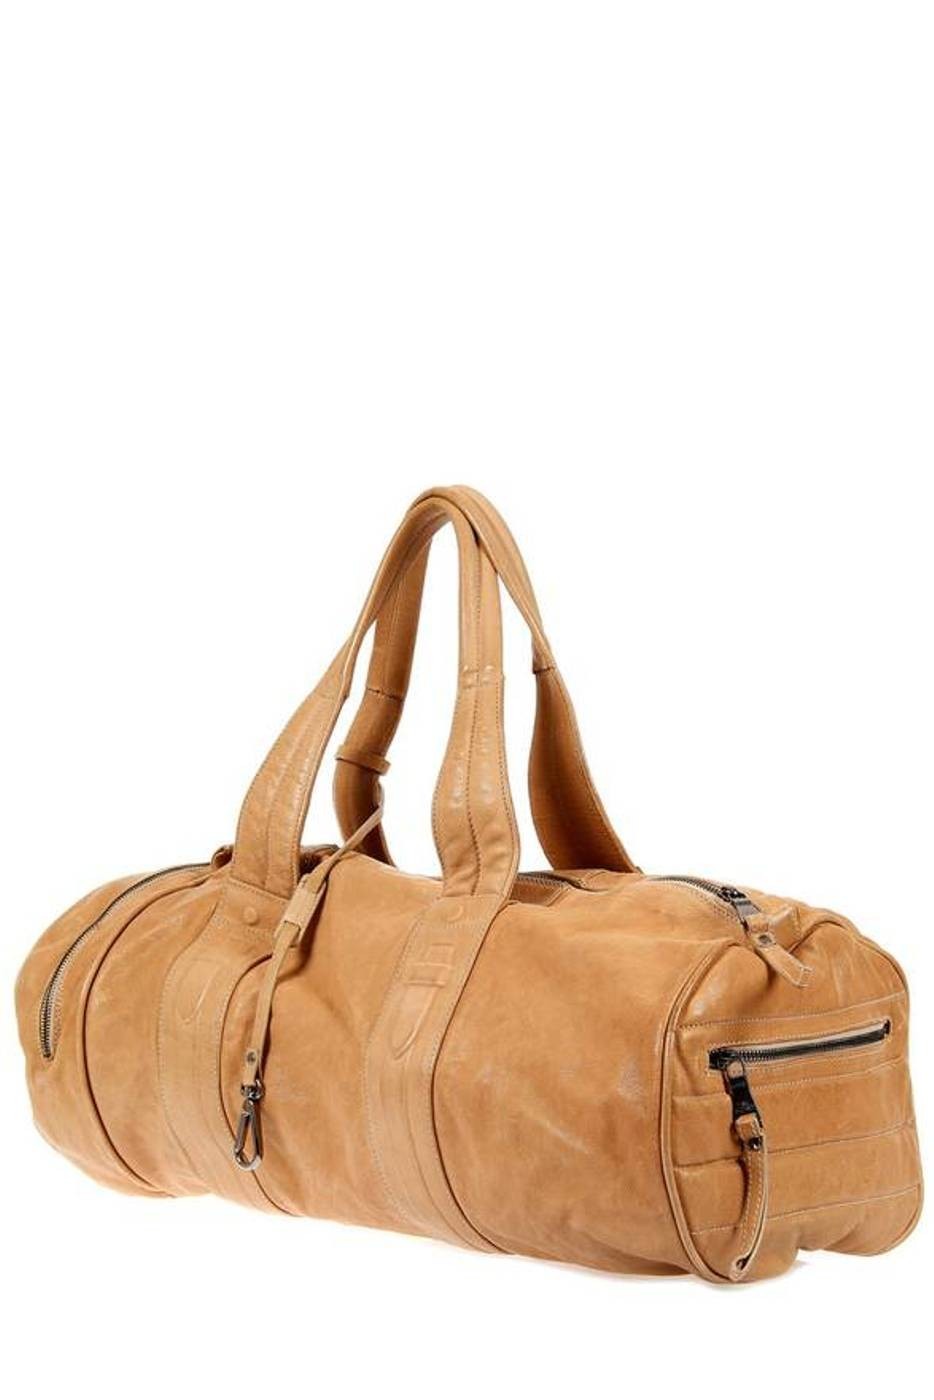 leather duffle bag - 1